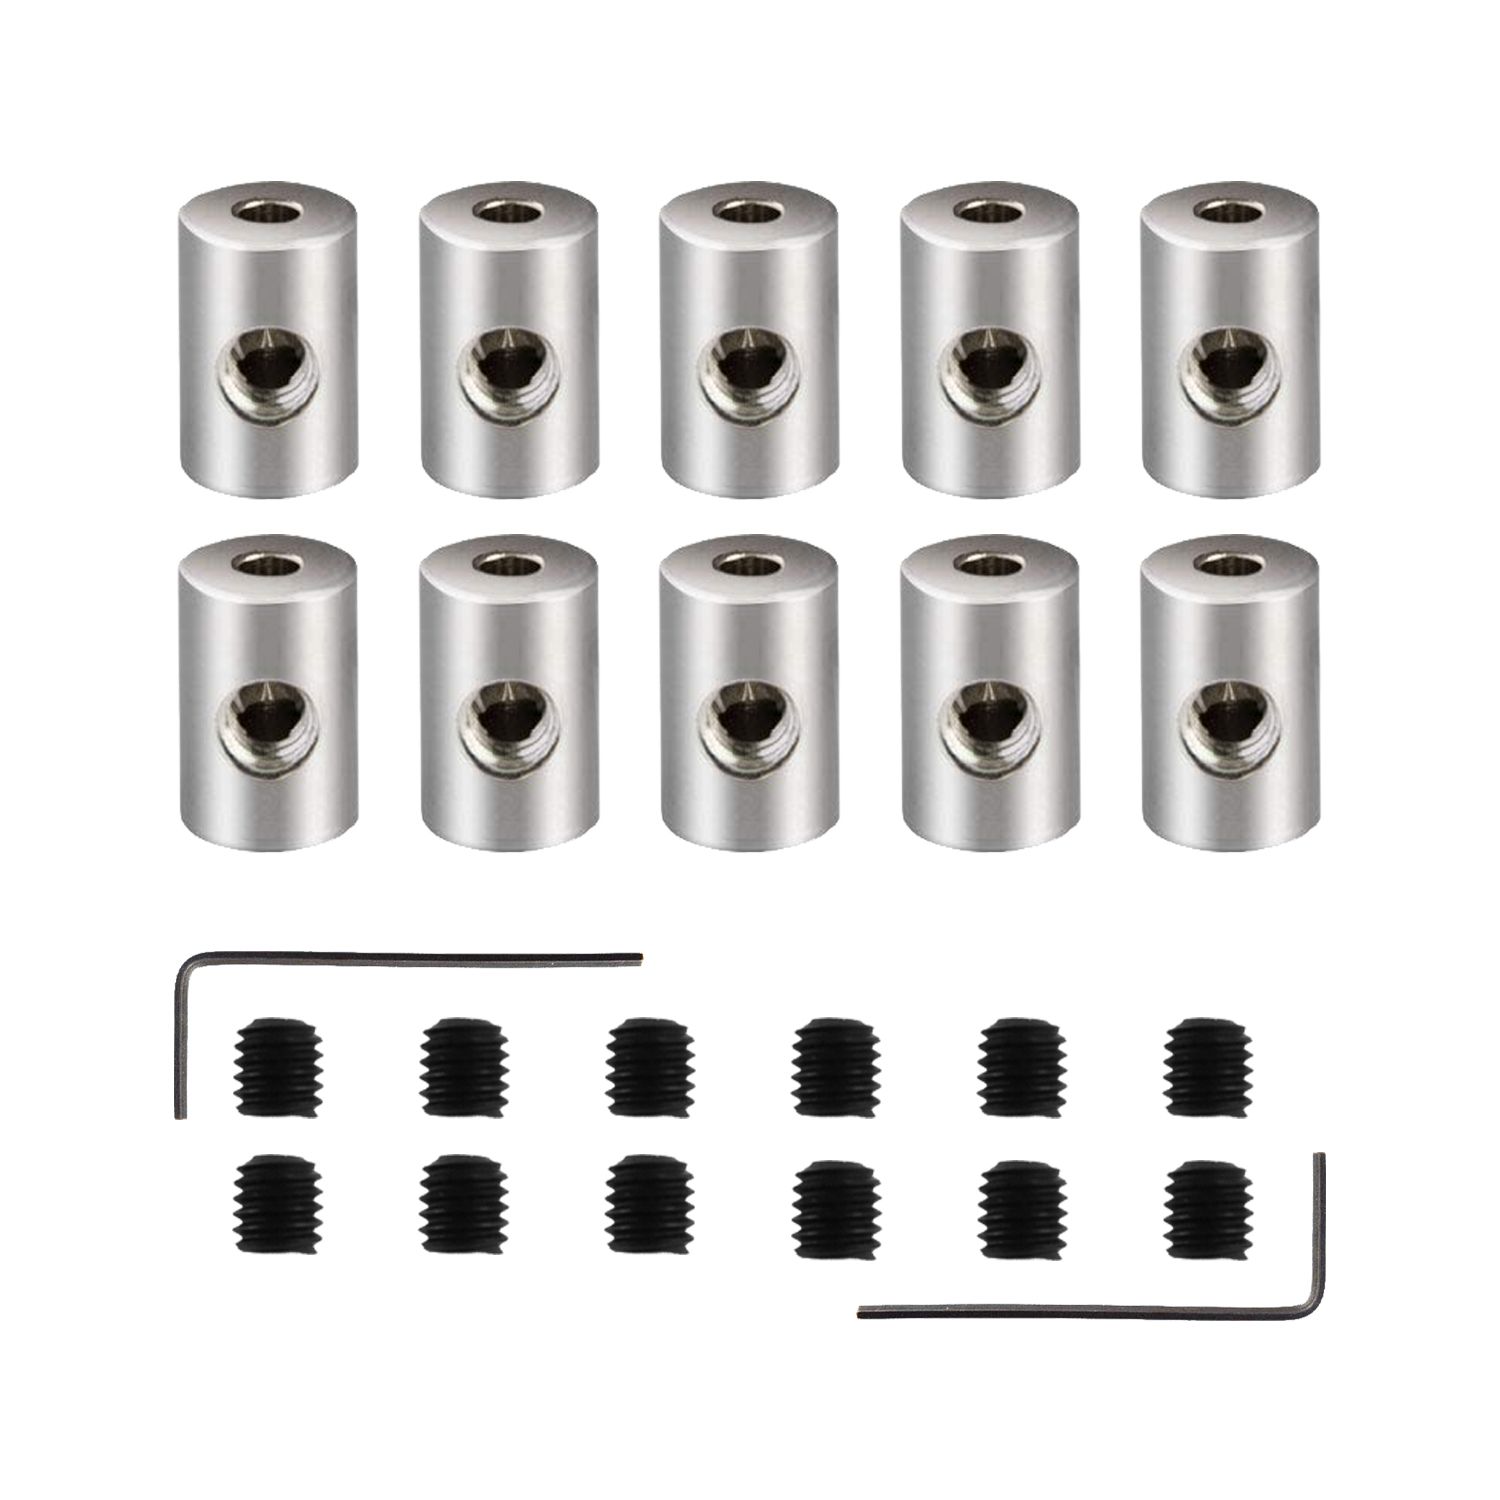 ZTWEDEN 50 Count Pin Backs Locking Pin Keepers Pin Locks Metal Locking Clasp No Tool Required Locking Pin Backs Keepers 